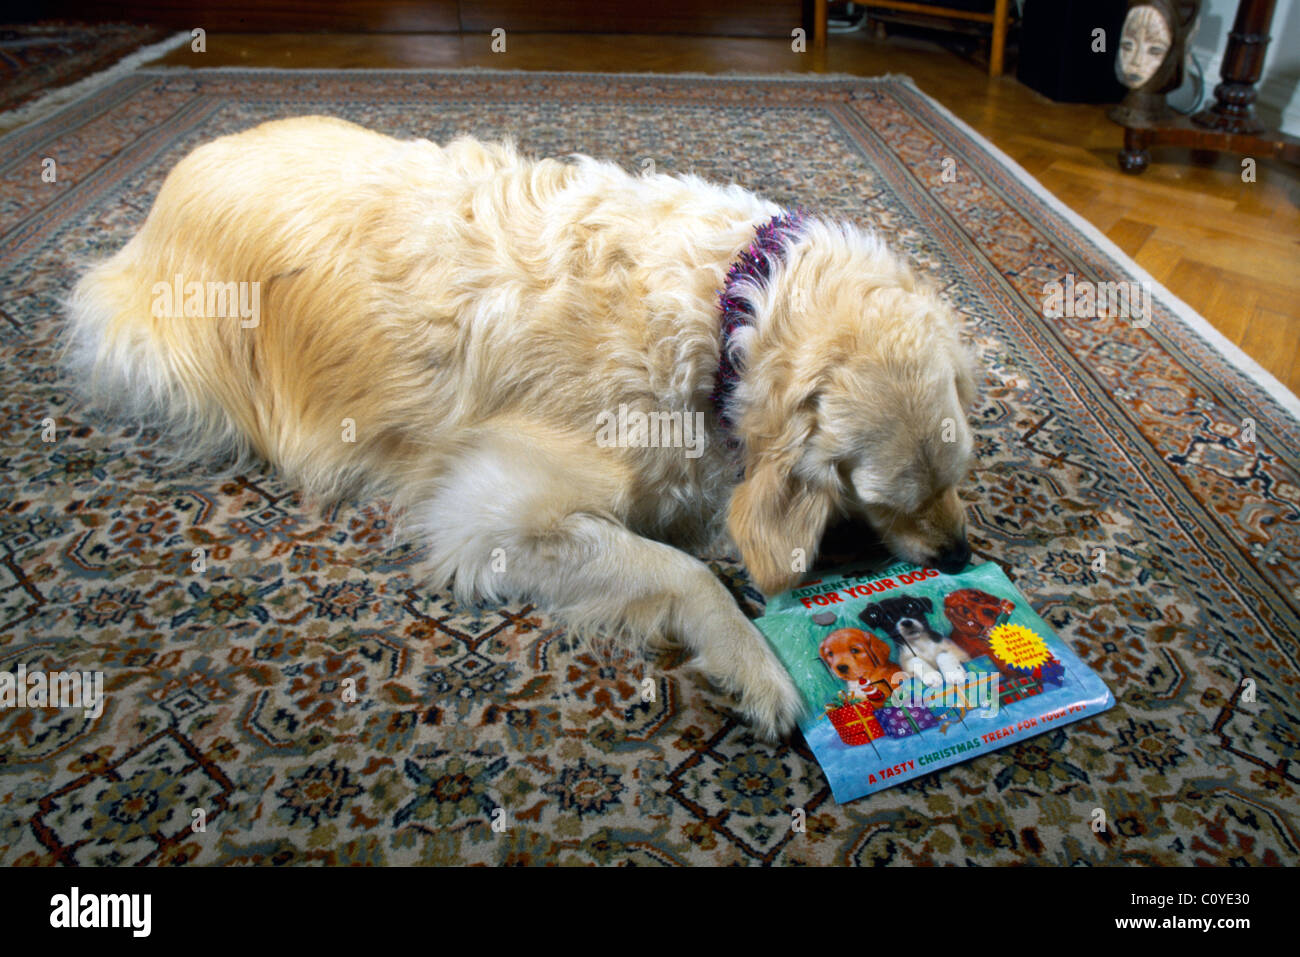 Golden Retriever With Advent Calendar For Dogs Stock Photo Alamy